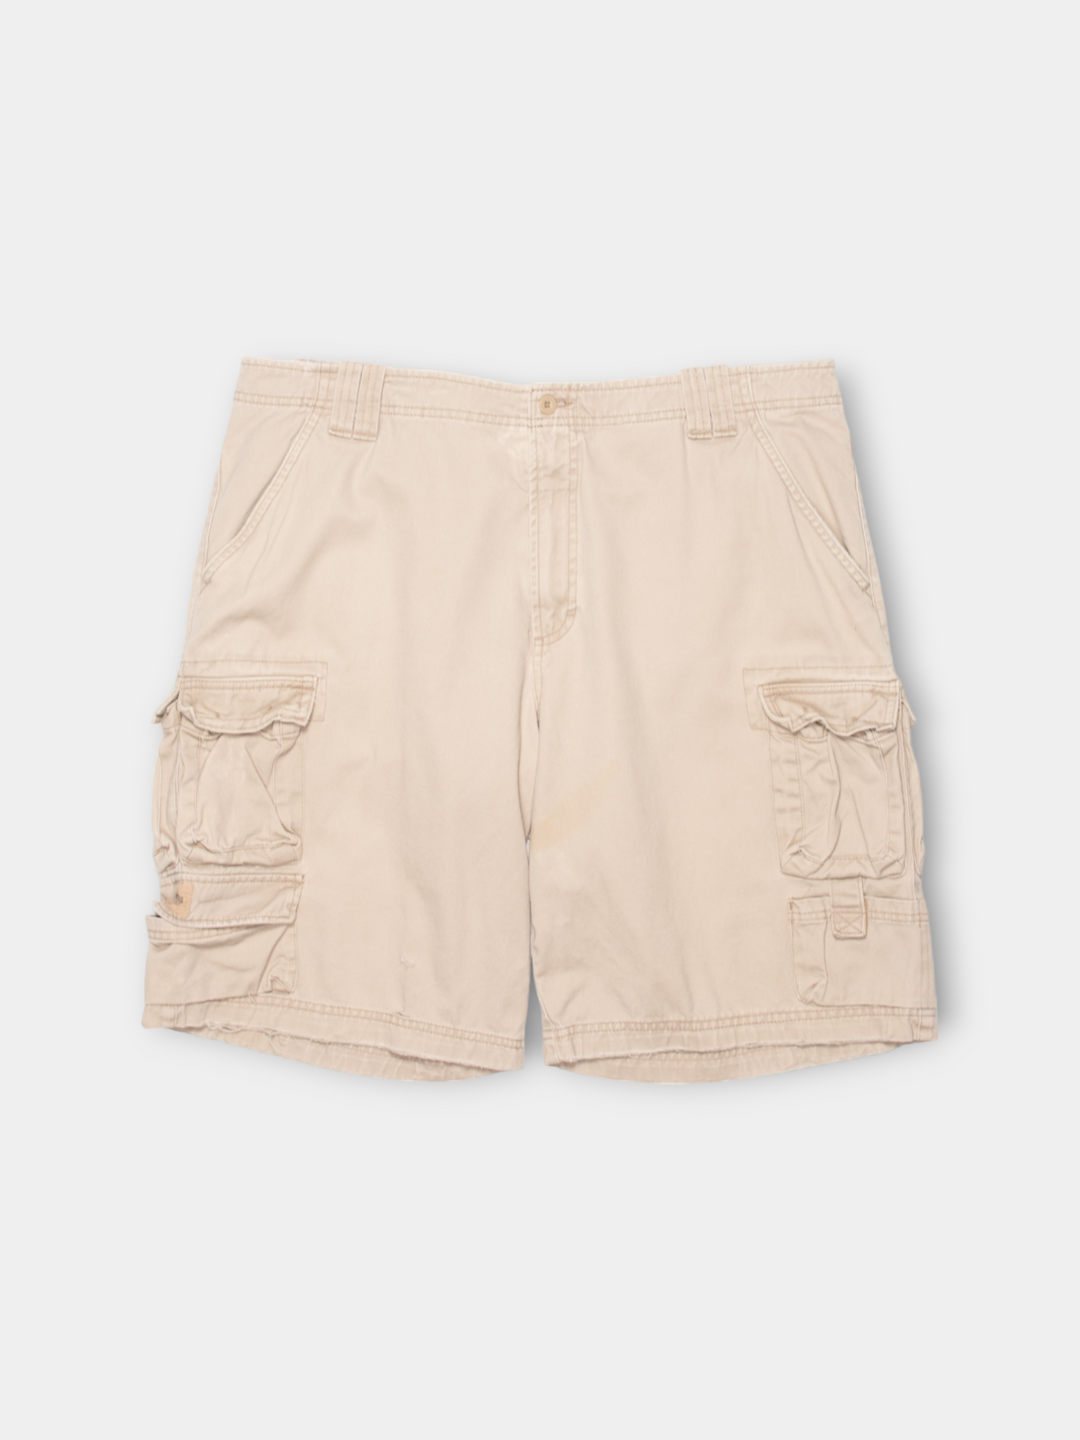 Vintage Lee Cargo Shorts (38")